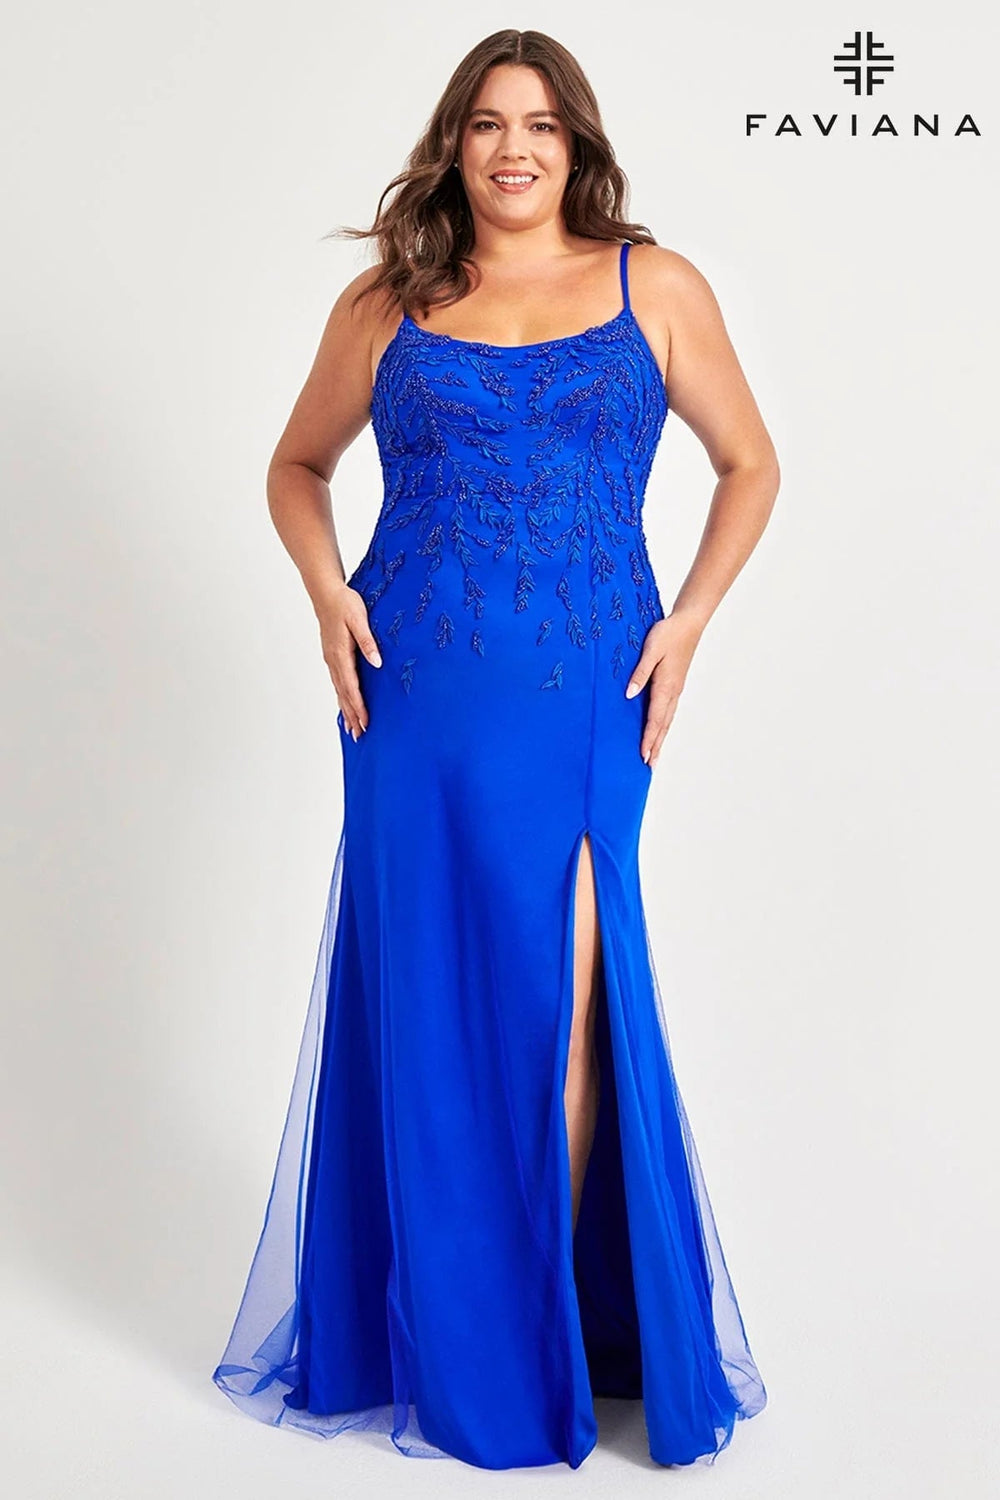 Faviana Evening Gown Plus Size FAVIANA 9559 Dress